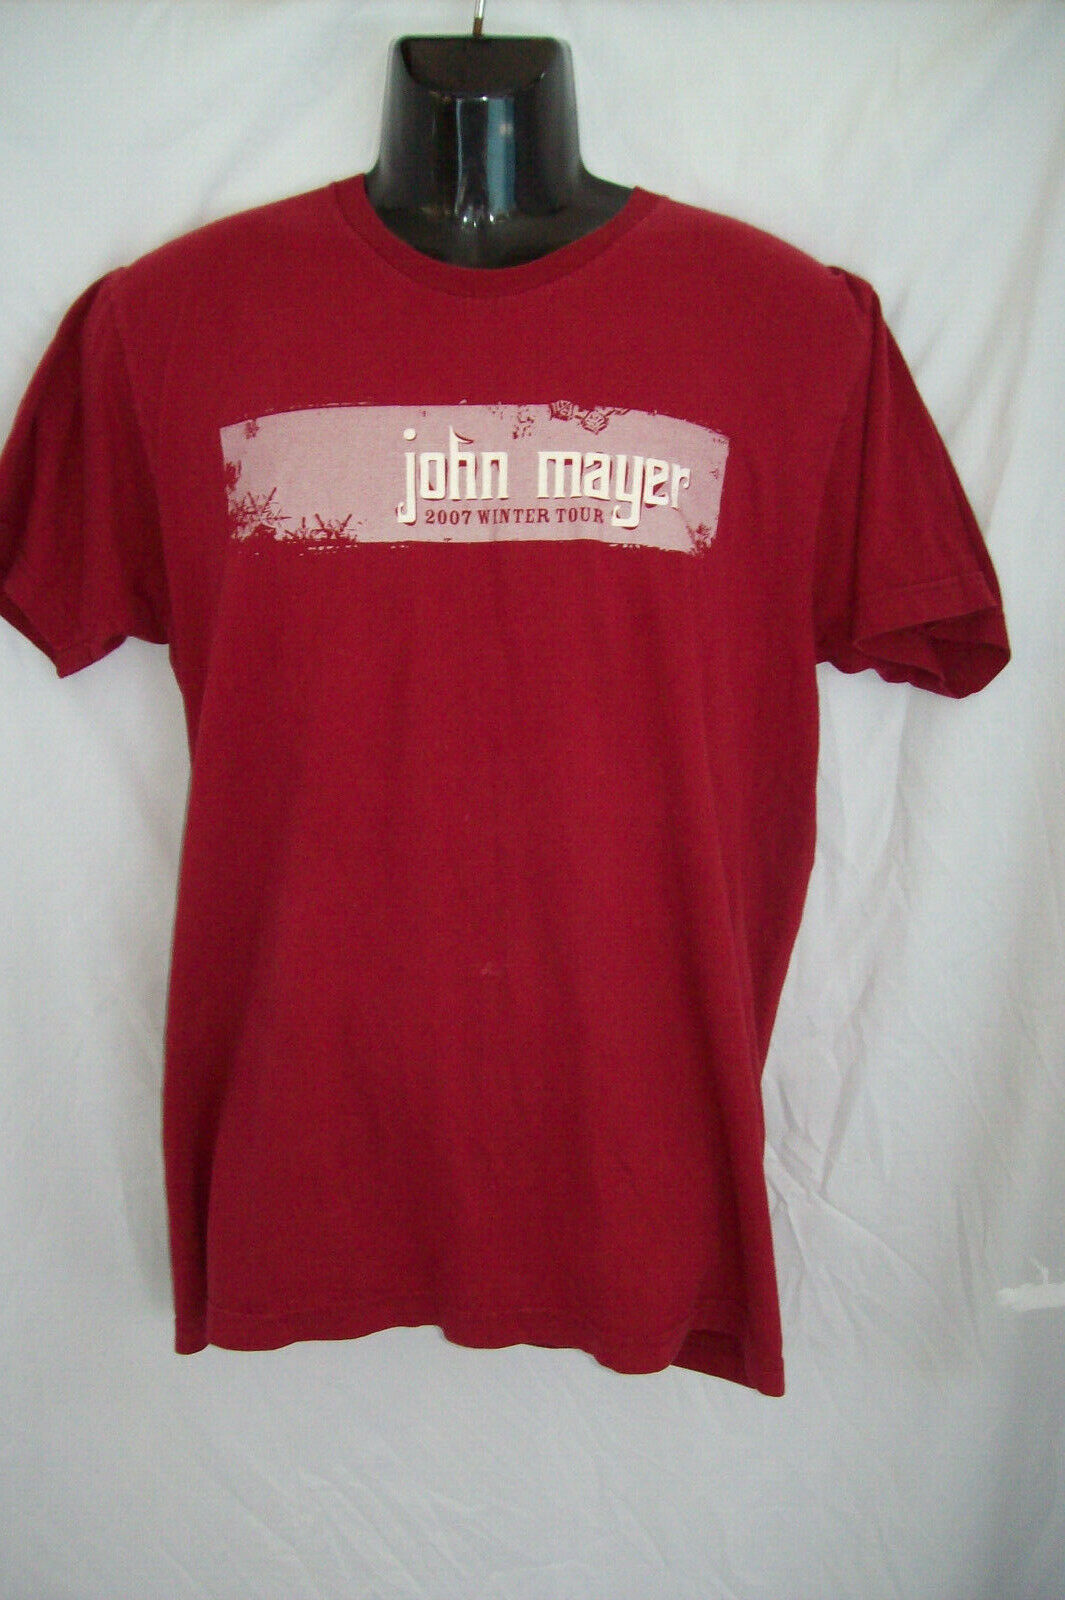 2007 John Mayer "winter Tour" Concert T-shirt Size Large American Apparel